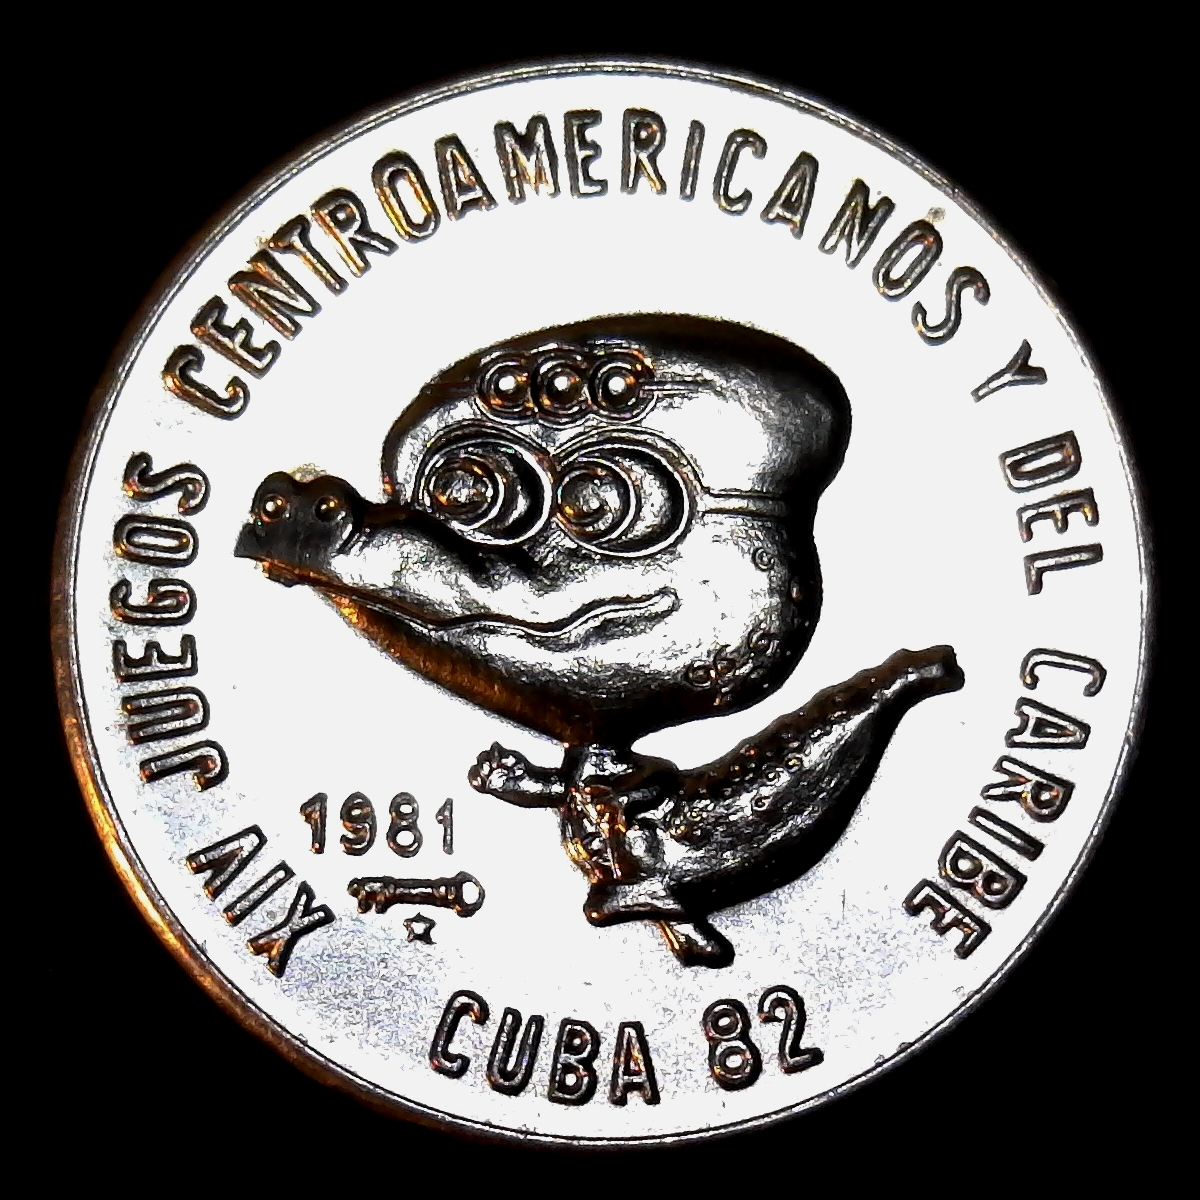 Cuba 1 Peso Alligator 1981 obverse less 5.jpg